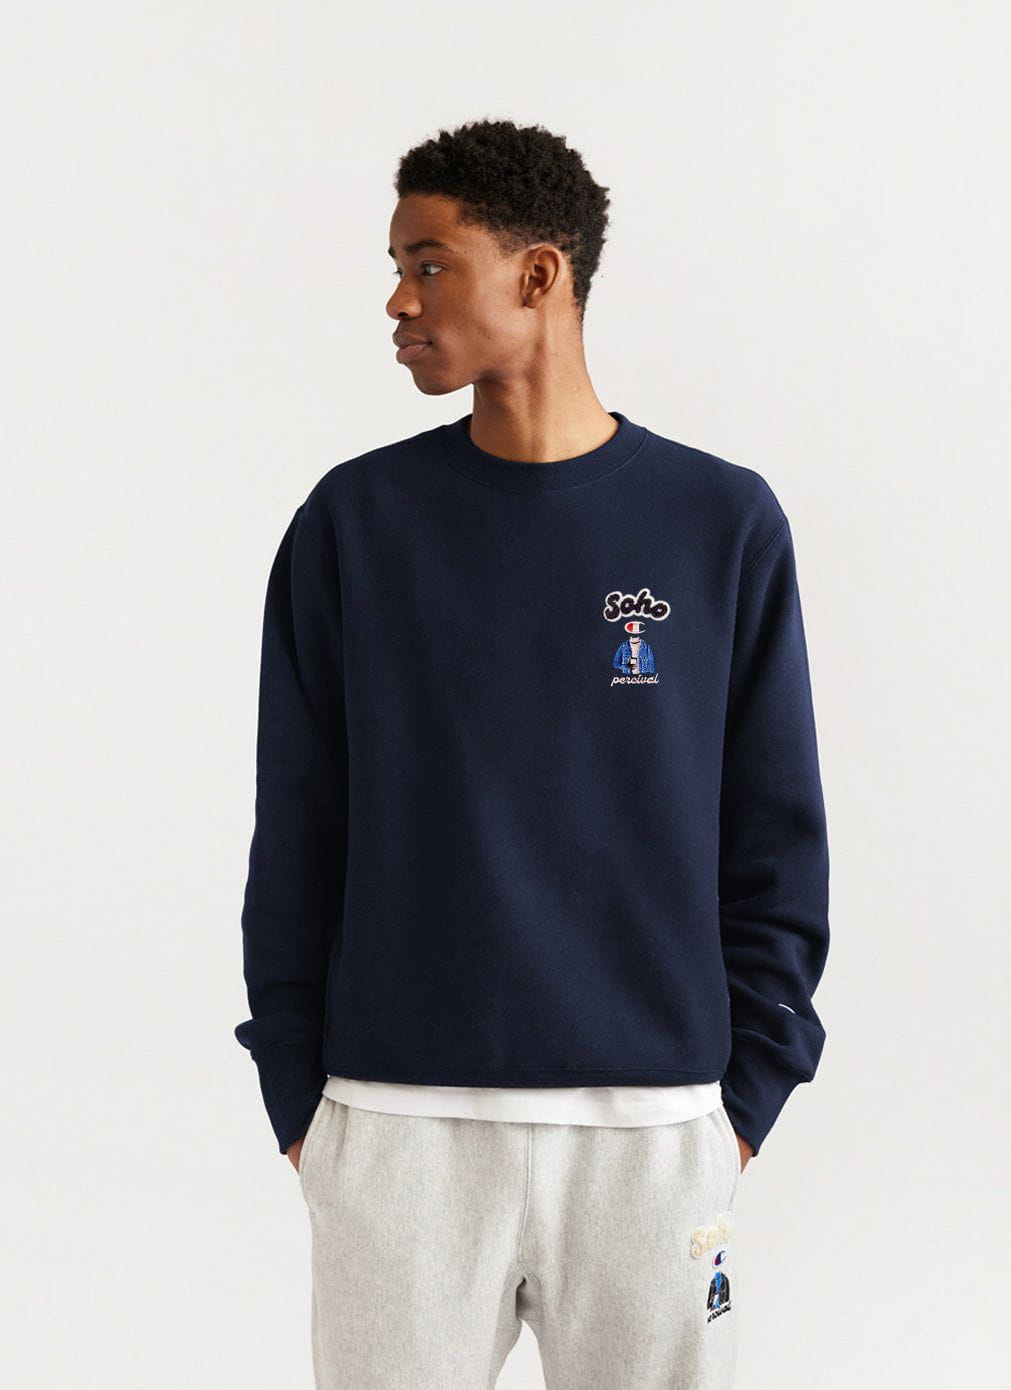 Men's Navy Embroidered Champion Sweatshirt | Soho | Percival Menswear